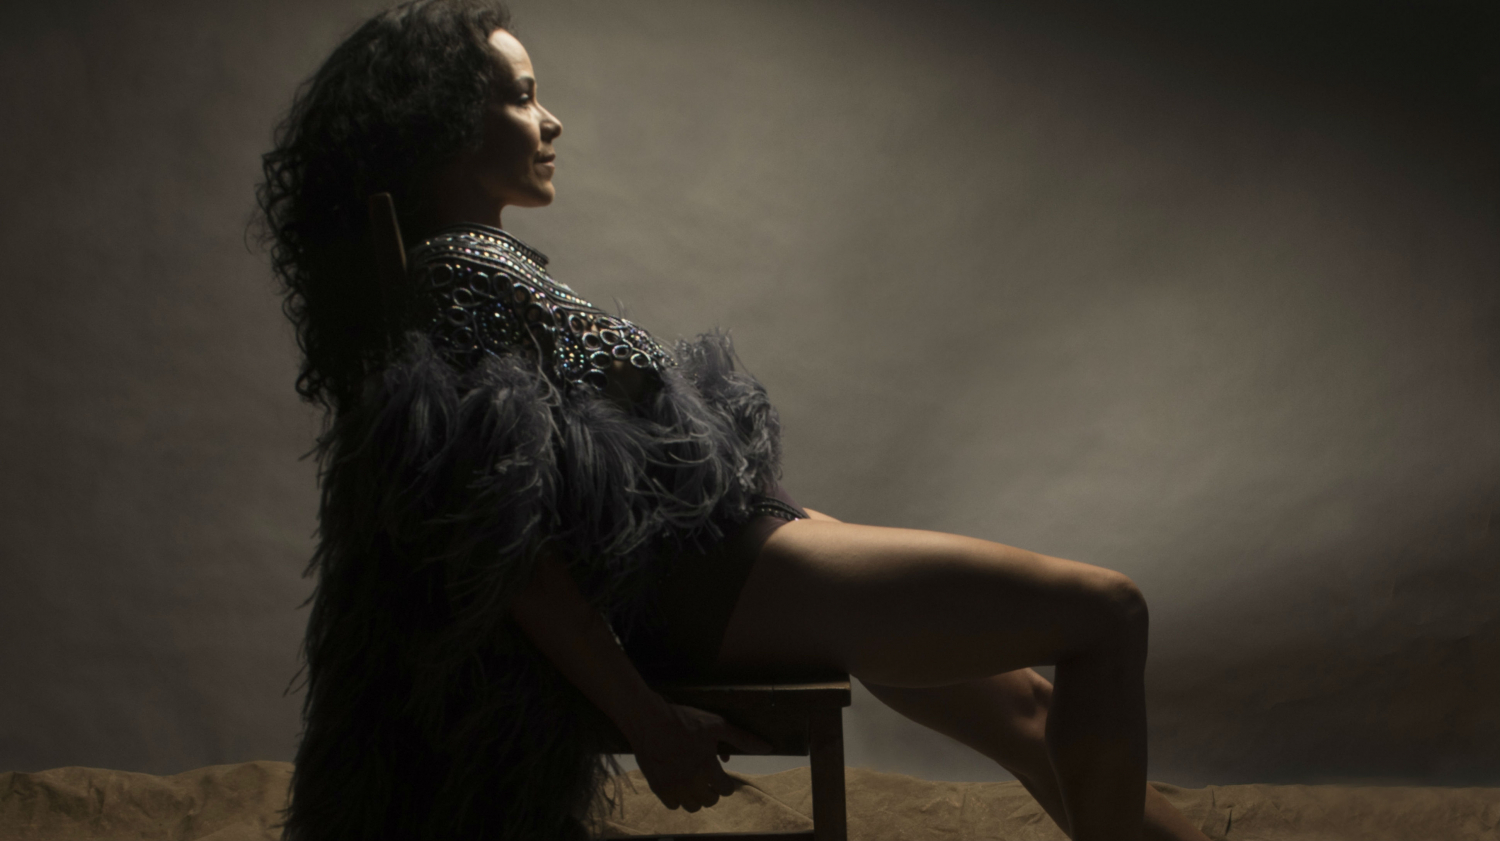 Ingrid Chavez: Prince protégé returns with sexy, sensual ‘Memories of Flying’ album